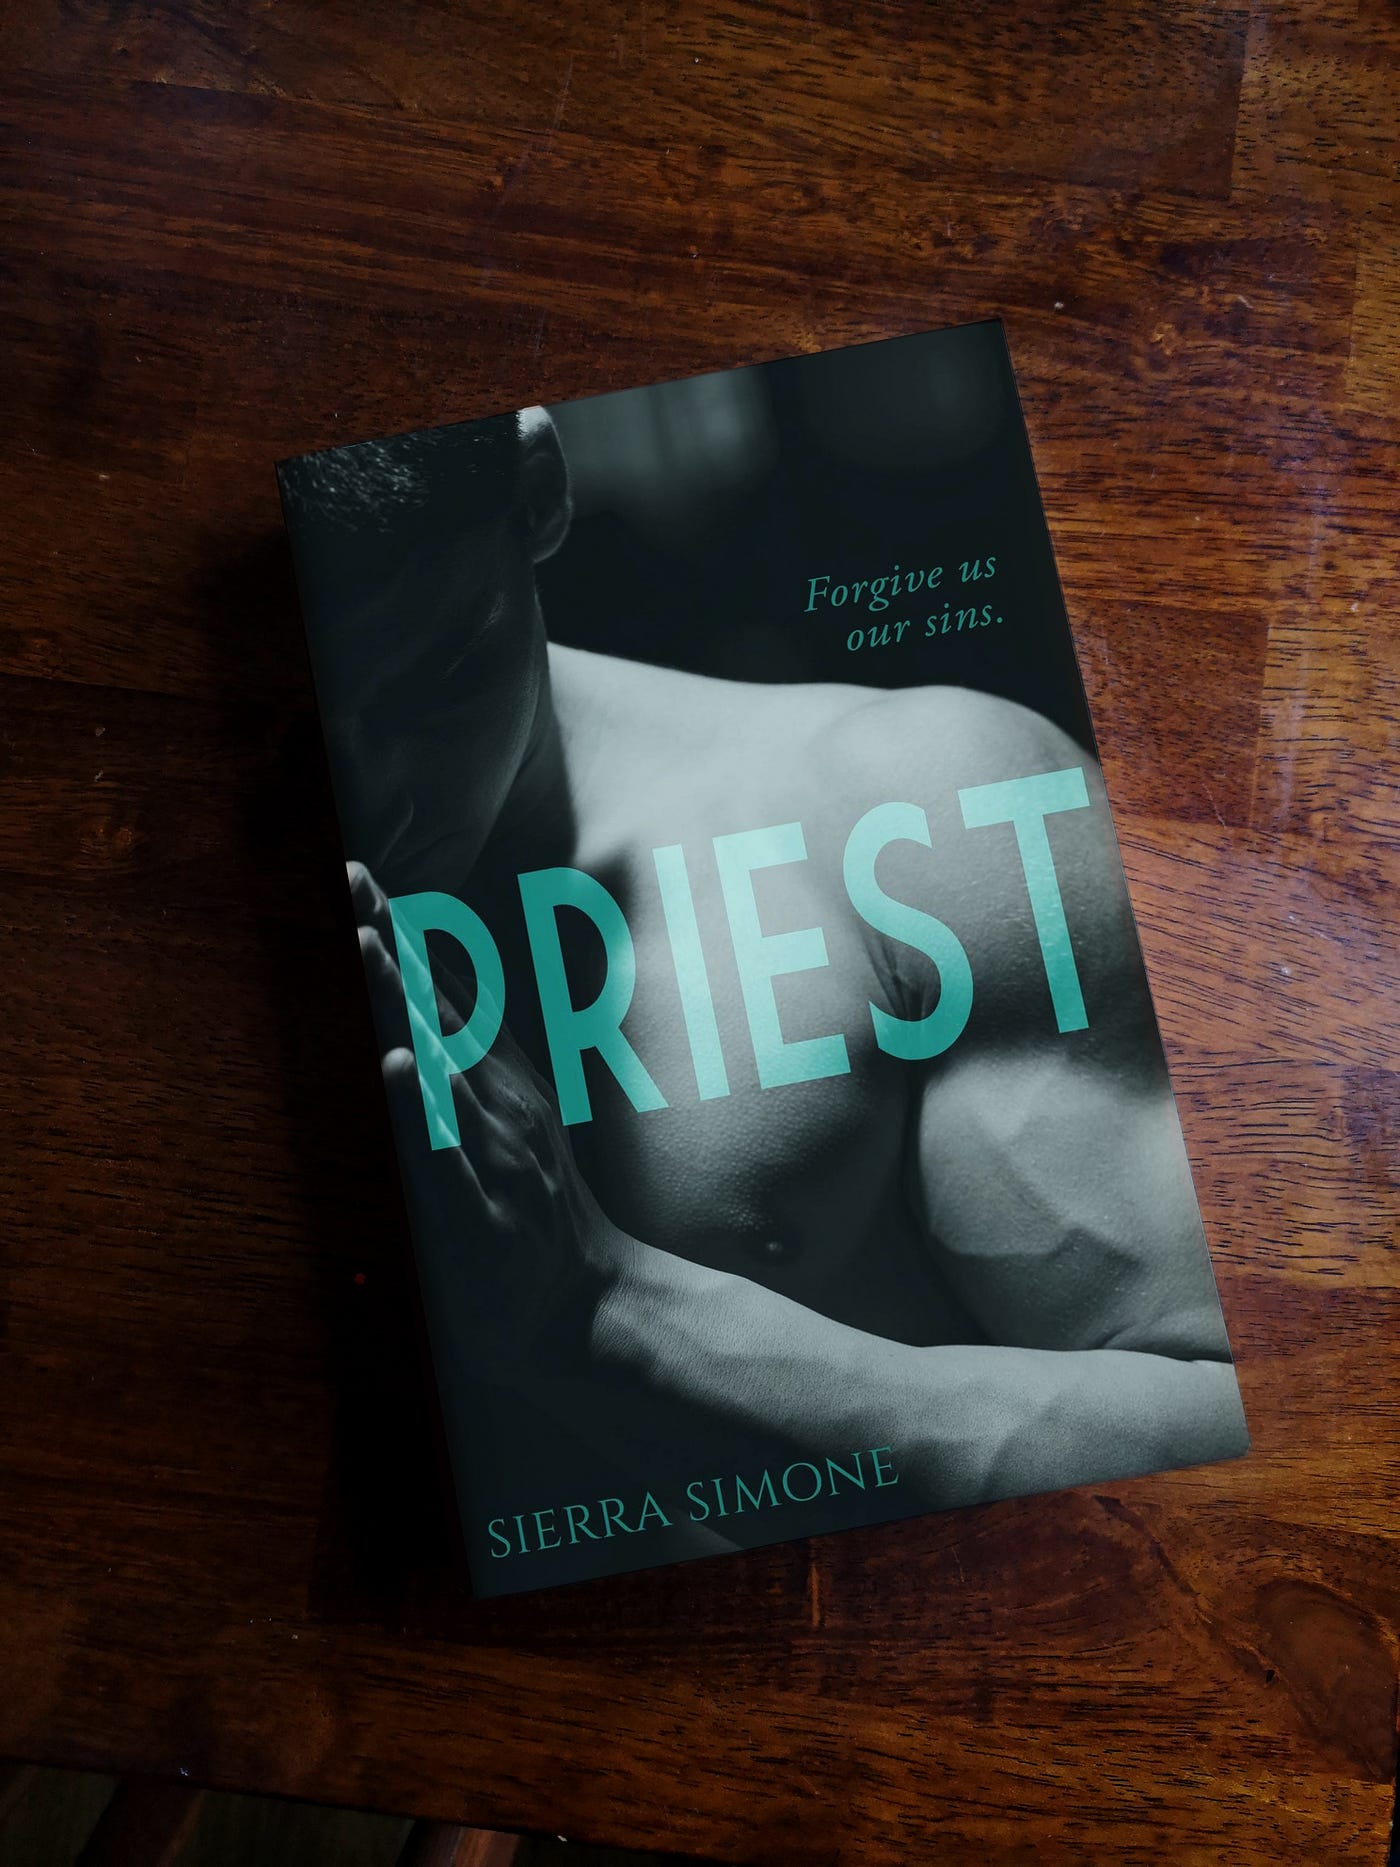 The Sex Life of Saint Augustine: Spiritual Ecstasy and Sierra Simone's ' Priest' | by Eros Bittersweet | Medium